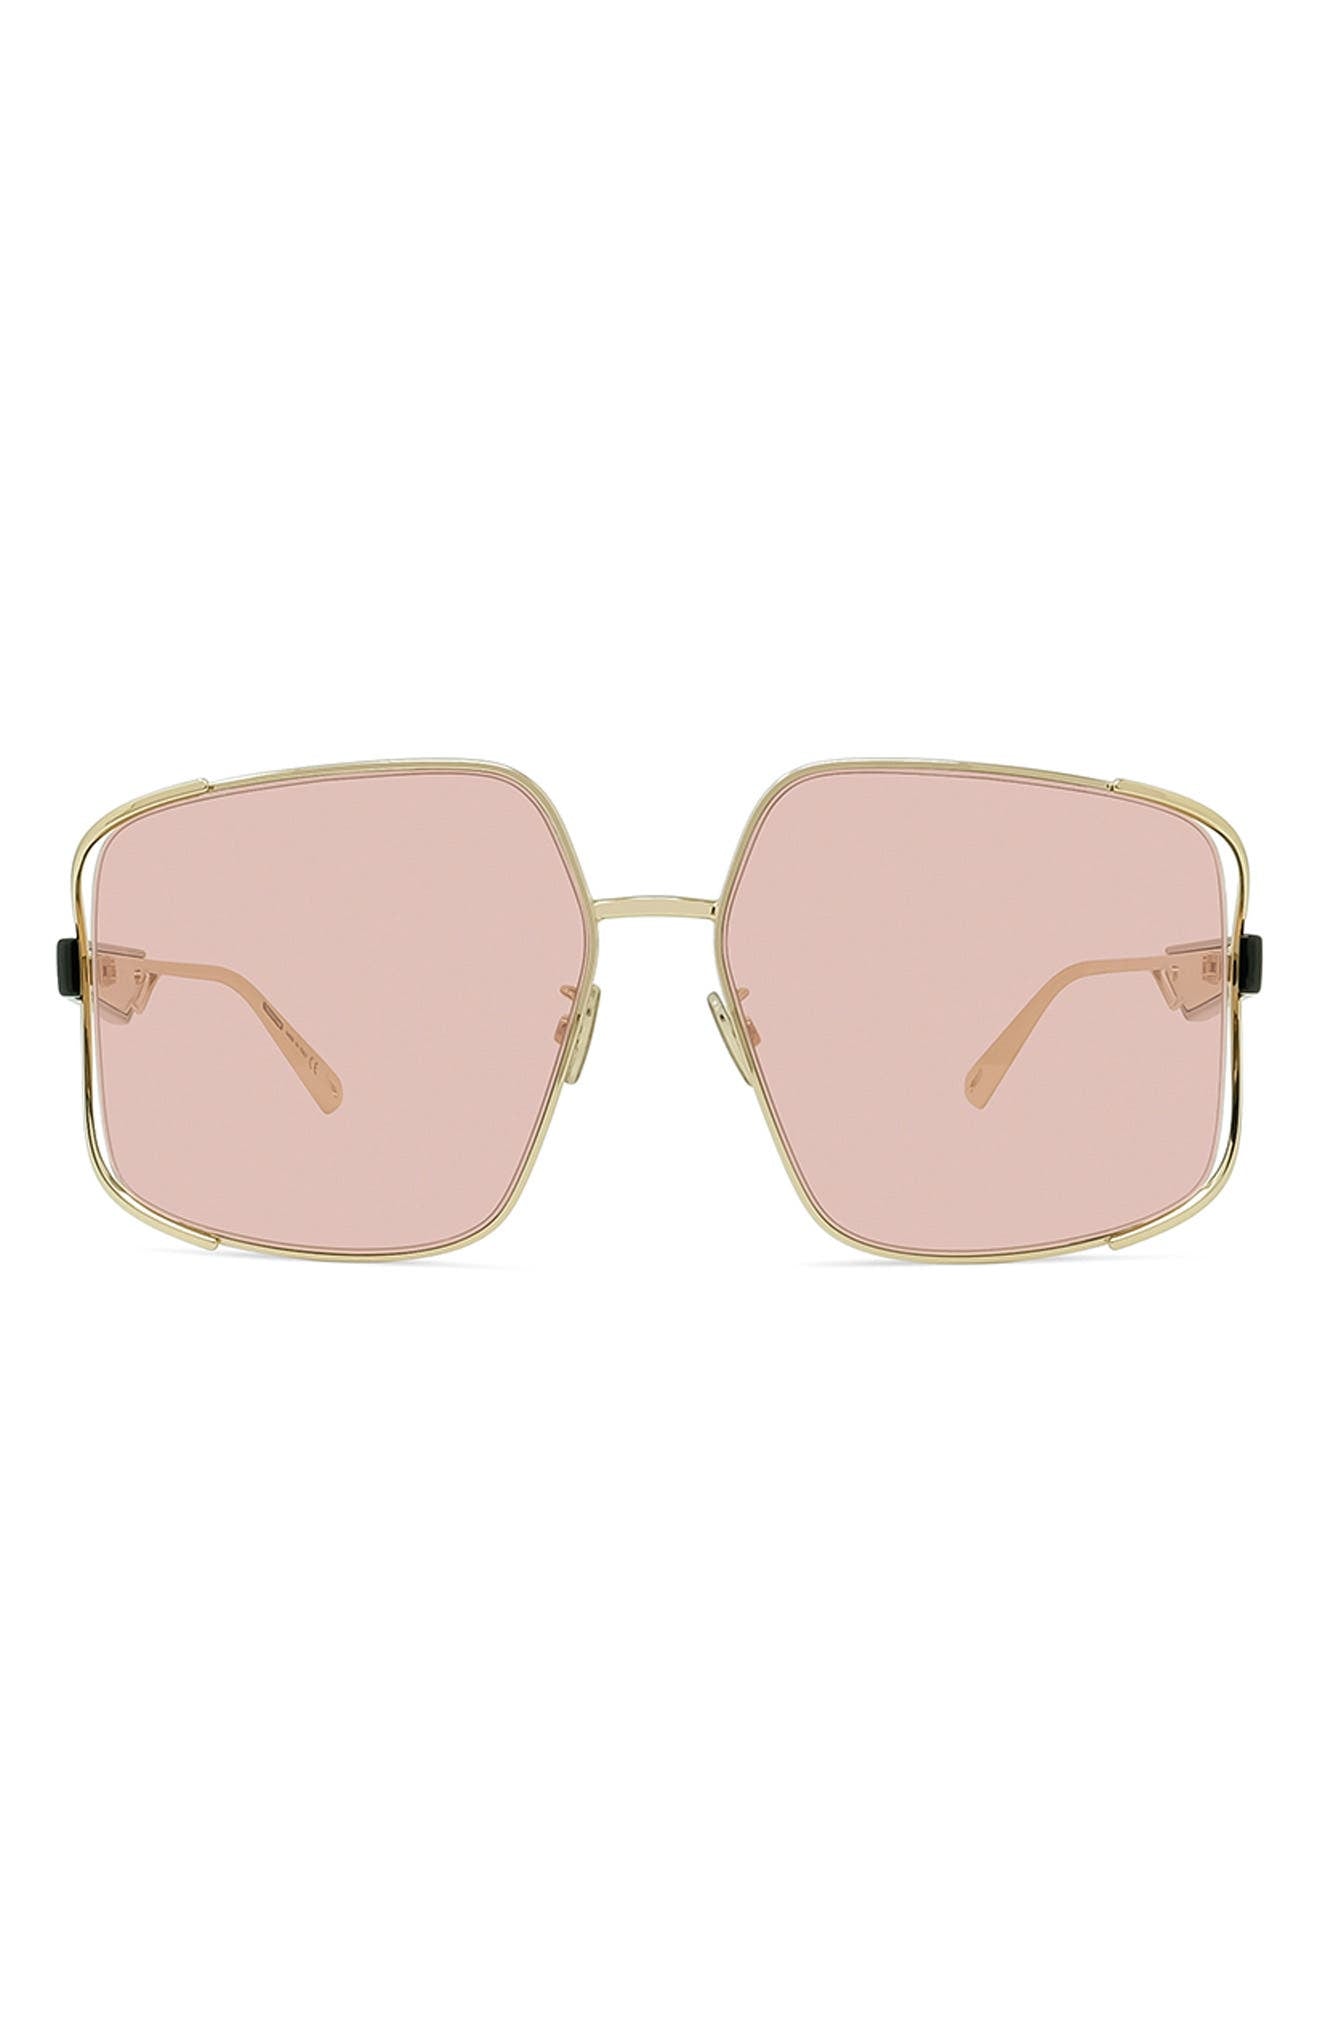 Christian Dior ARCHIDIOR-S1U-B0E0-61  New Sunglasses